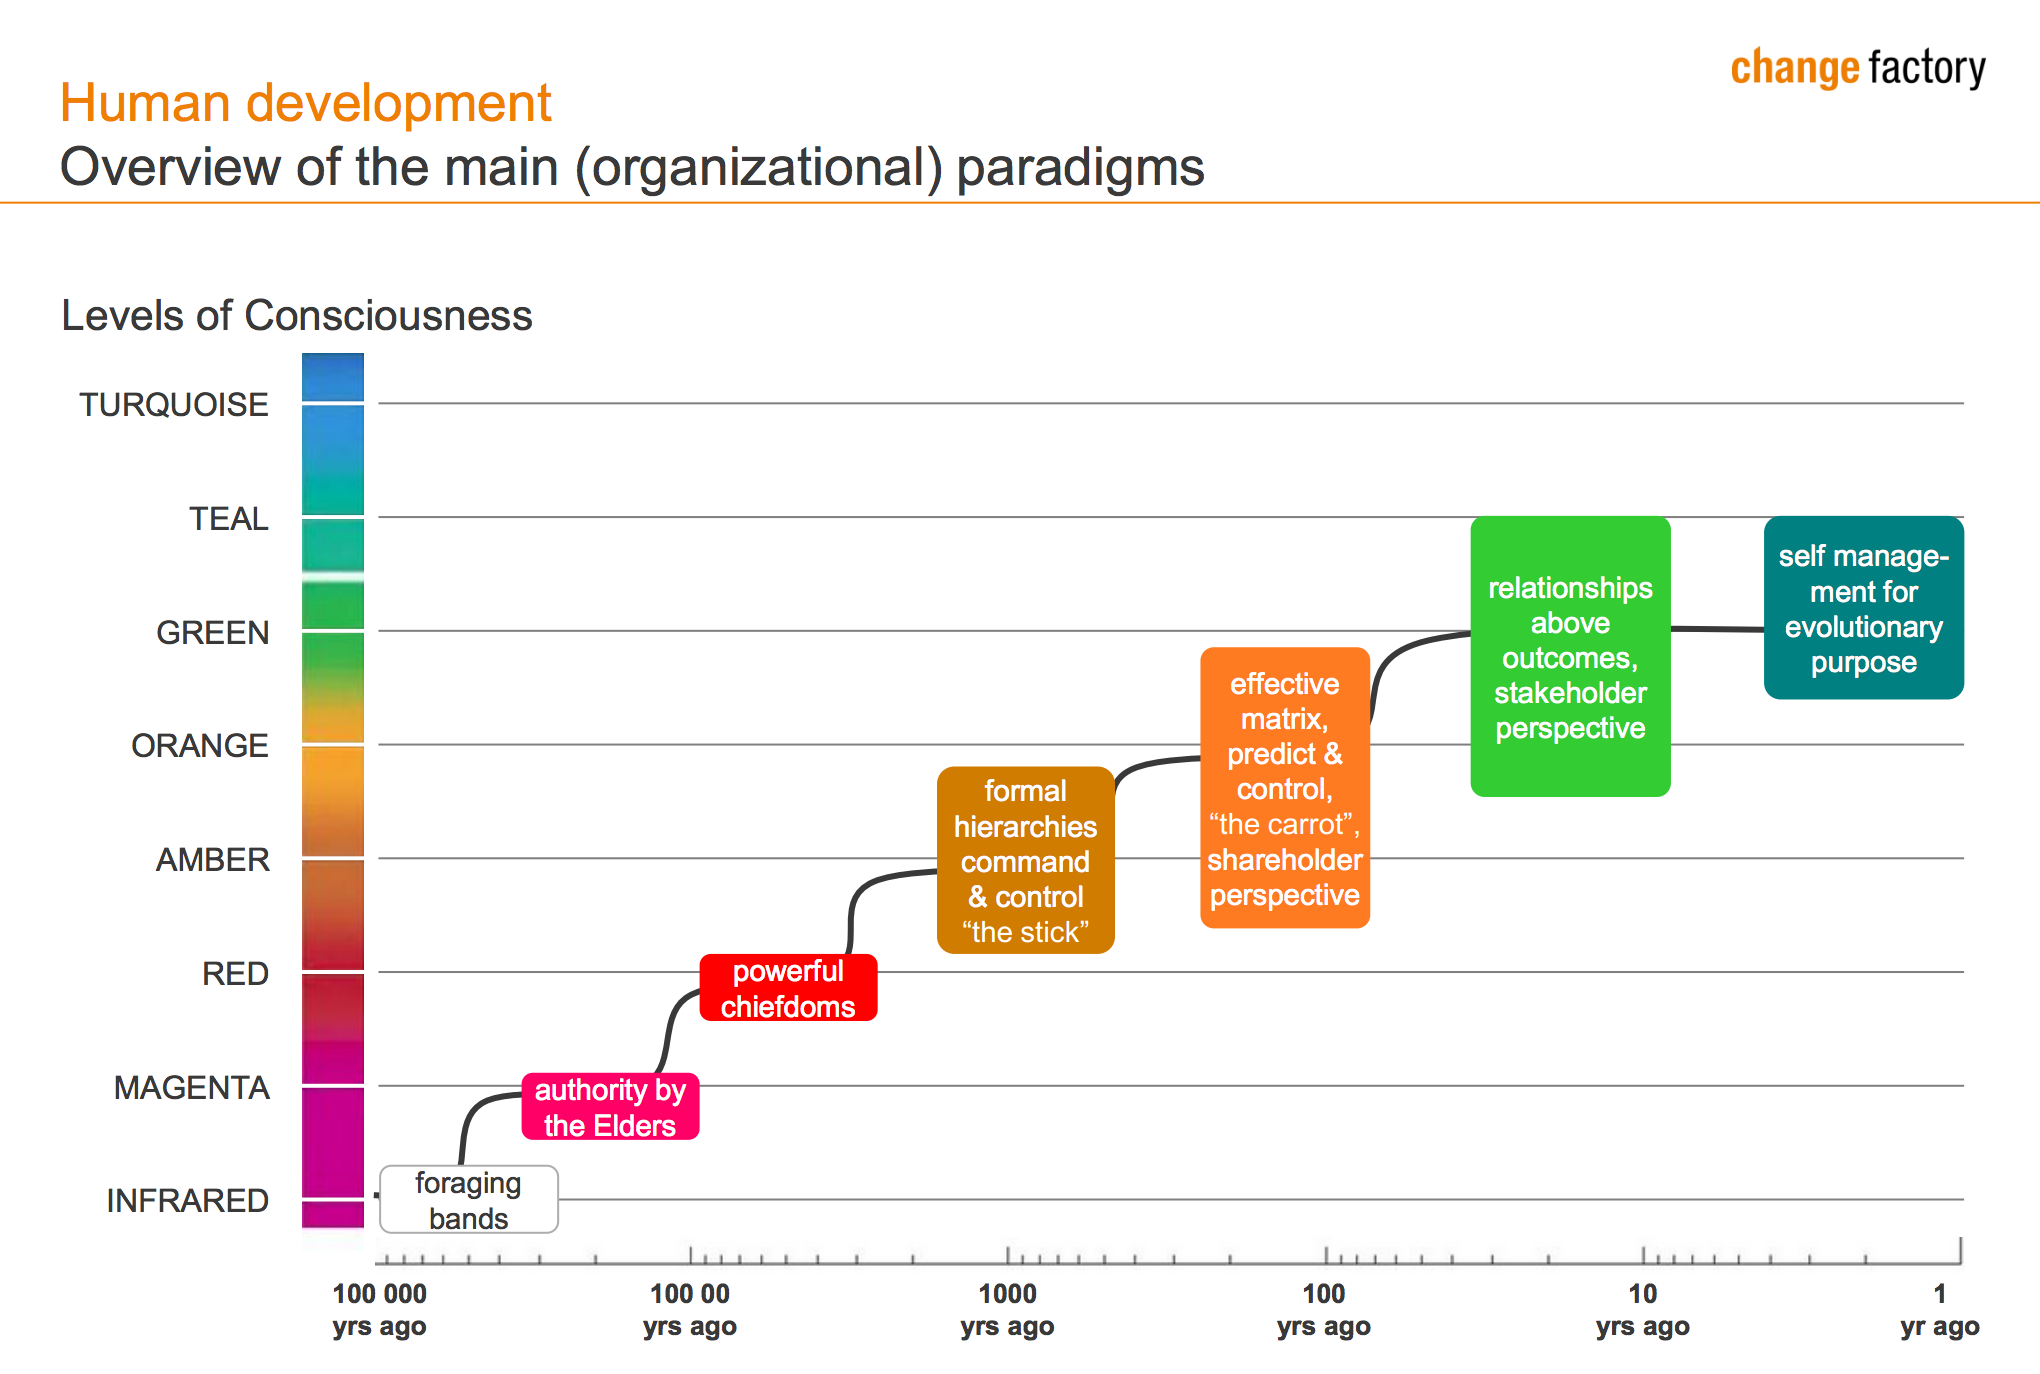 Human Development Reinventing Organizations chart